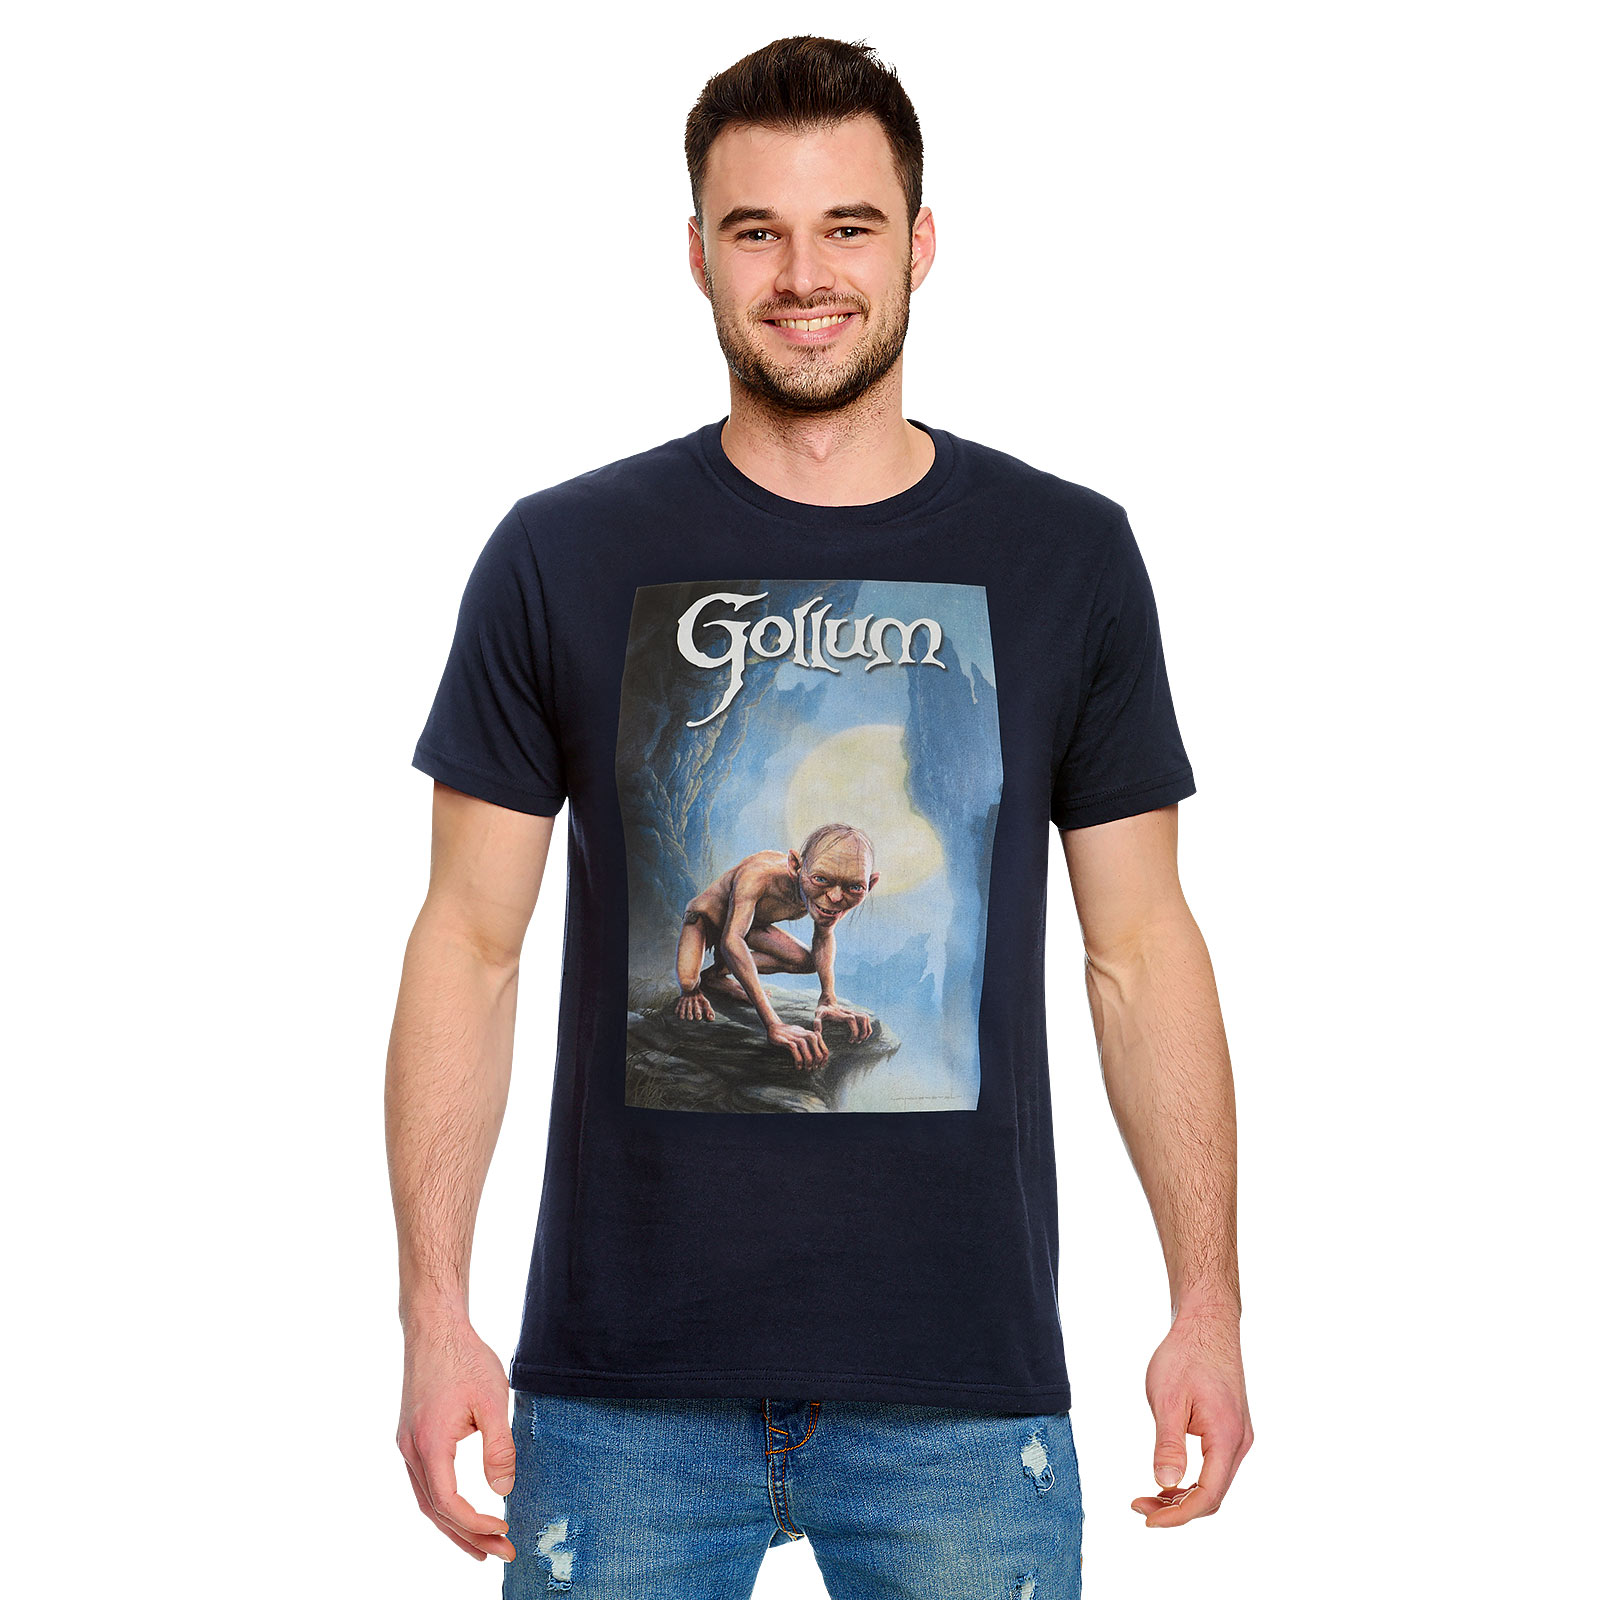 Herr der Ringe - Gollum T-Shirt blau